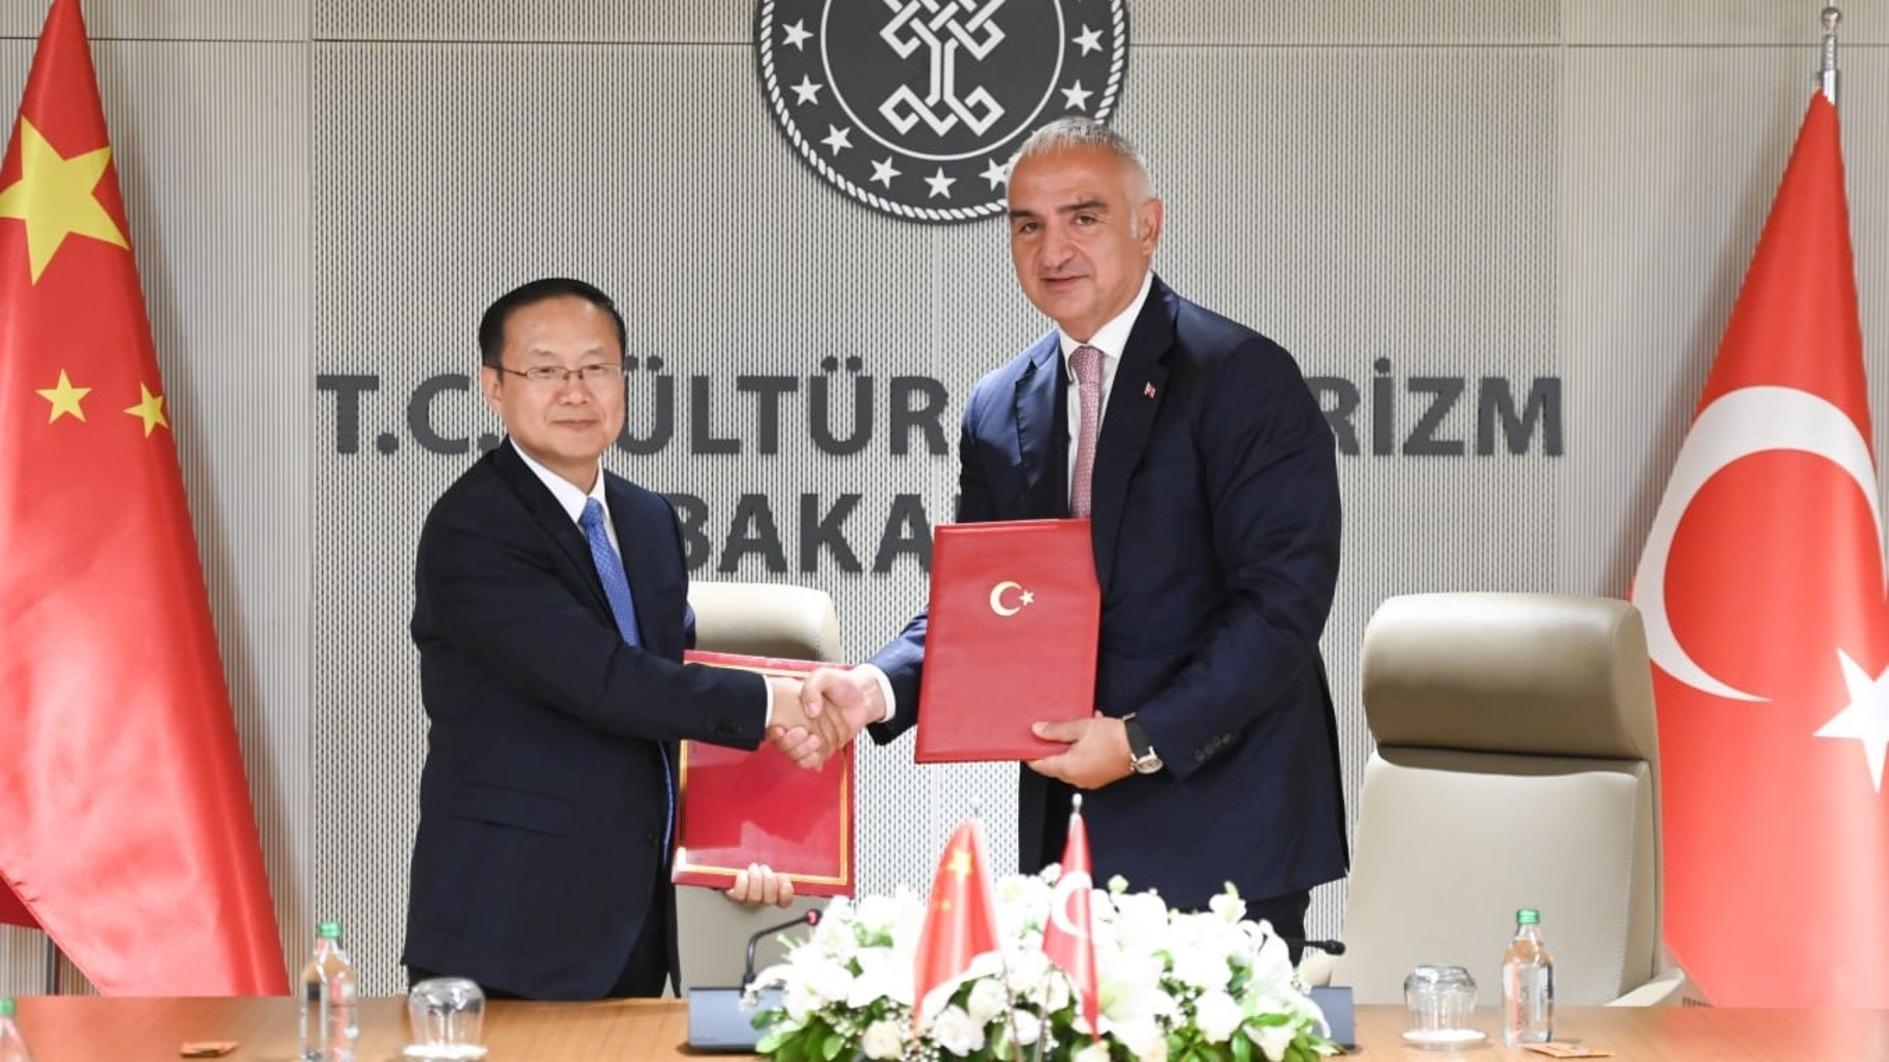 Türkiye, China sign deal on tourism cooperation